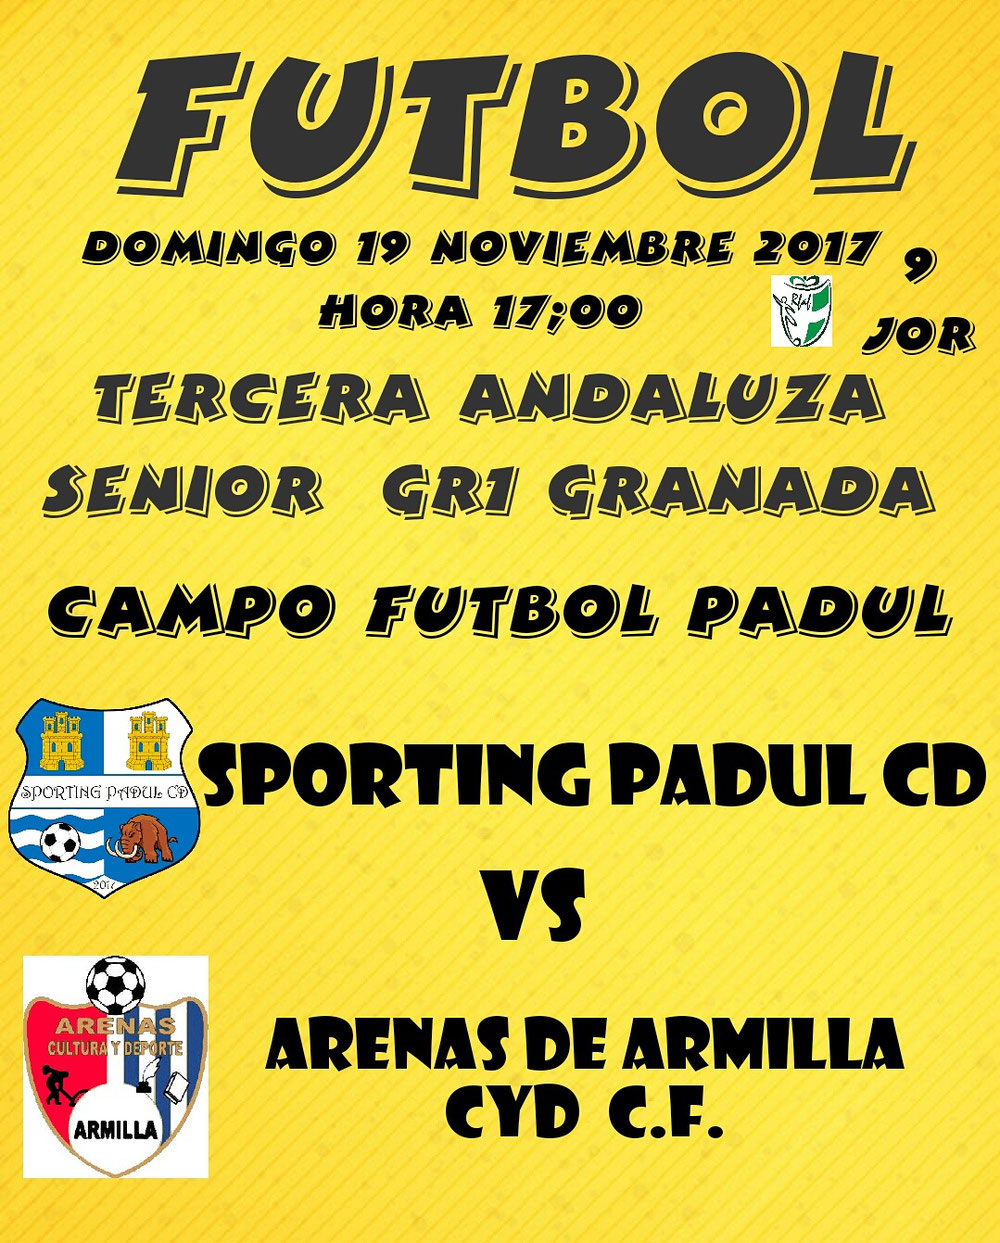 Sporting Padul CD vs Arenas De Armilla CYD C.f.